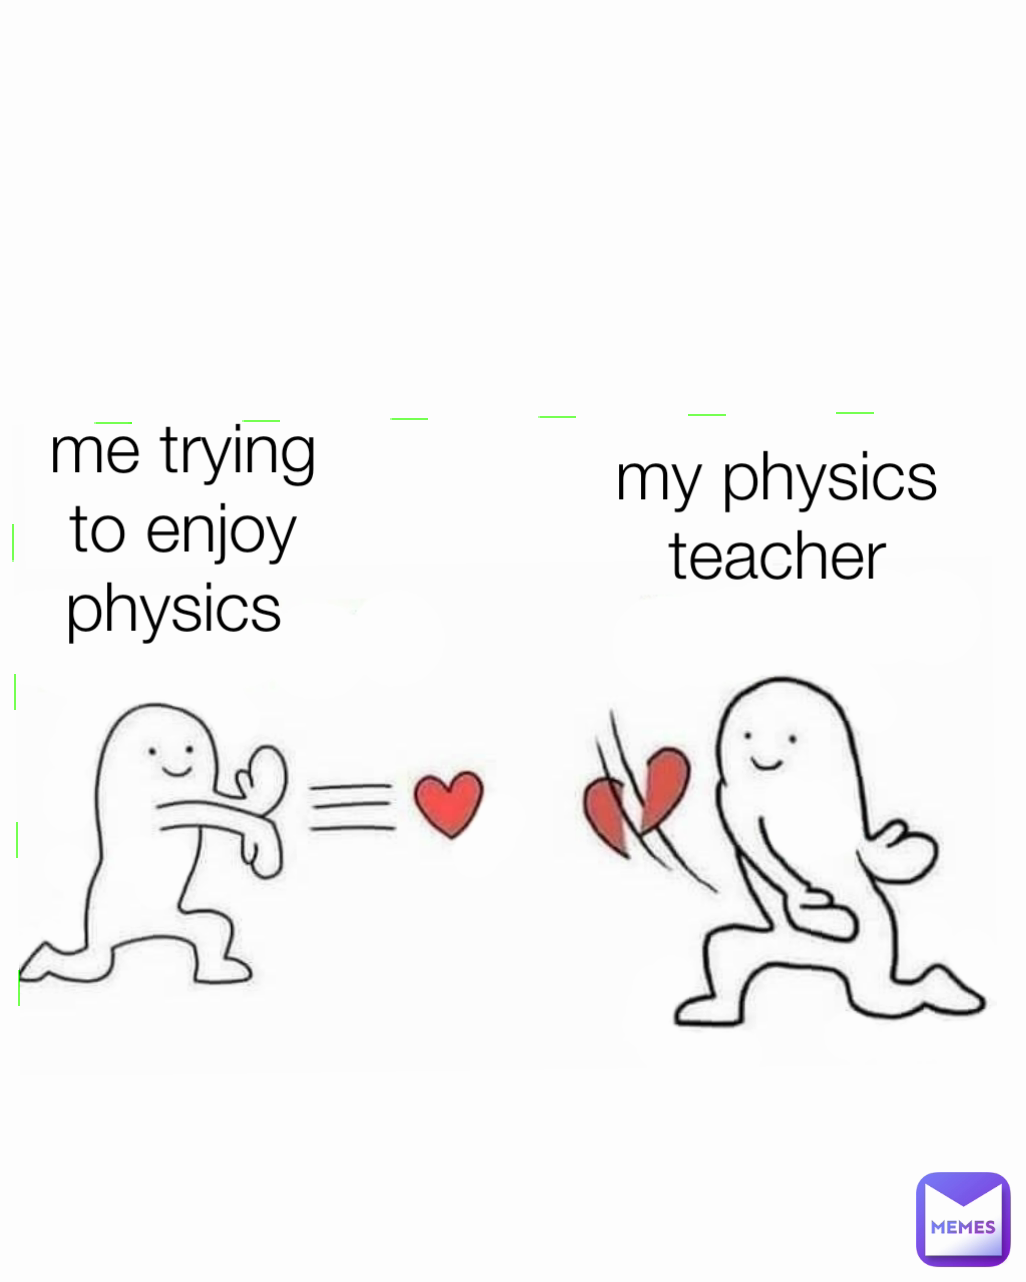 me trying to enjoy physics 
 my physics teacher
